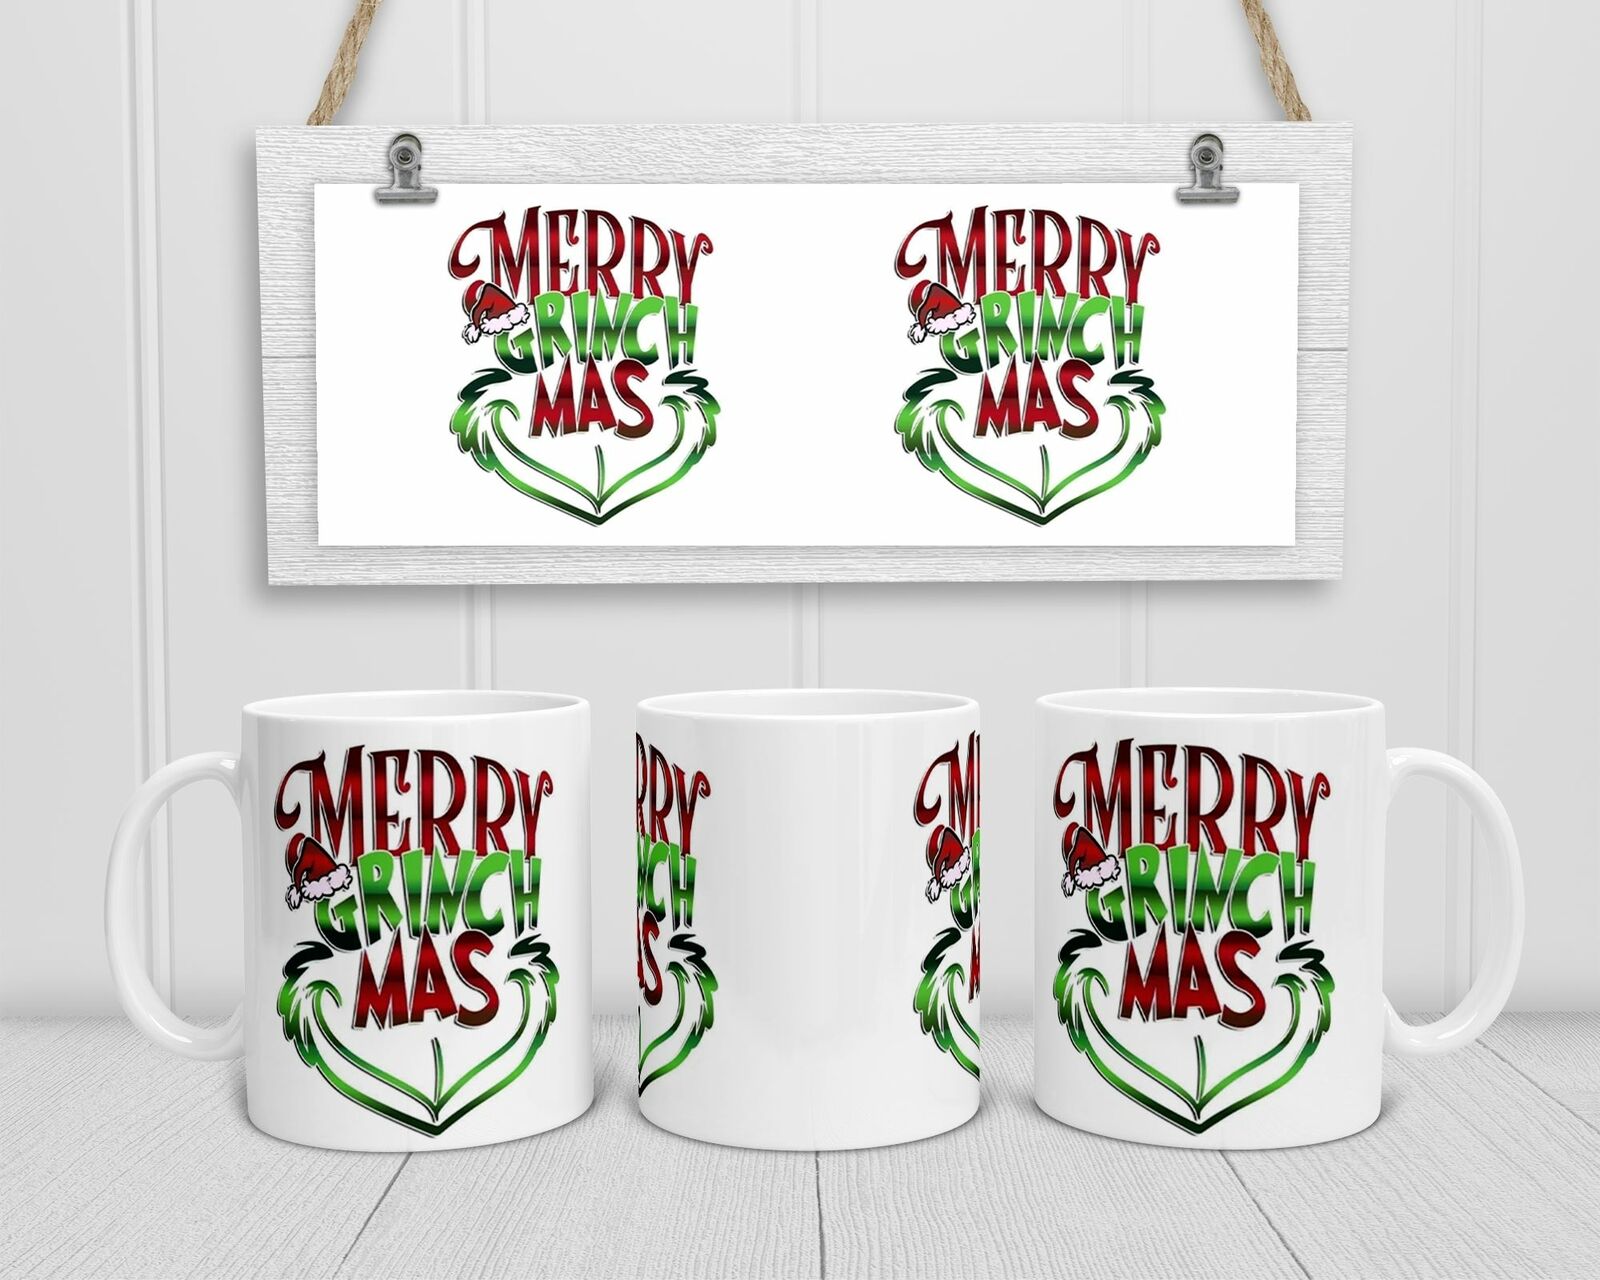 Merry Grinchmas Colorful Coffee Mug